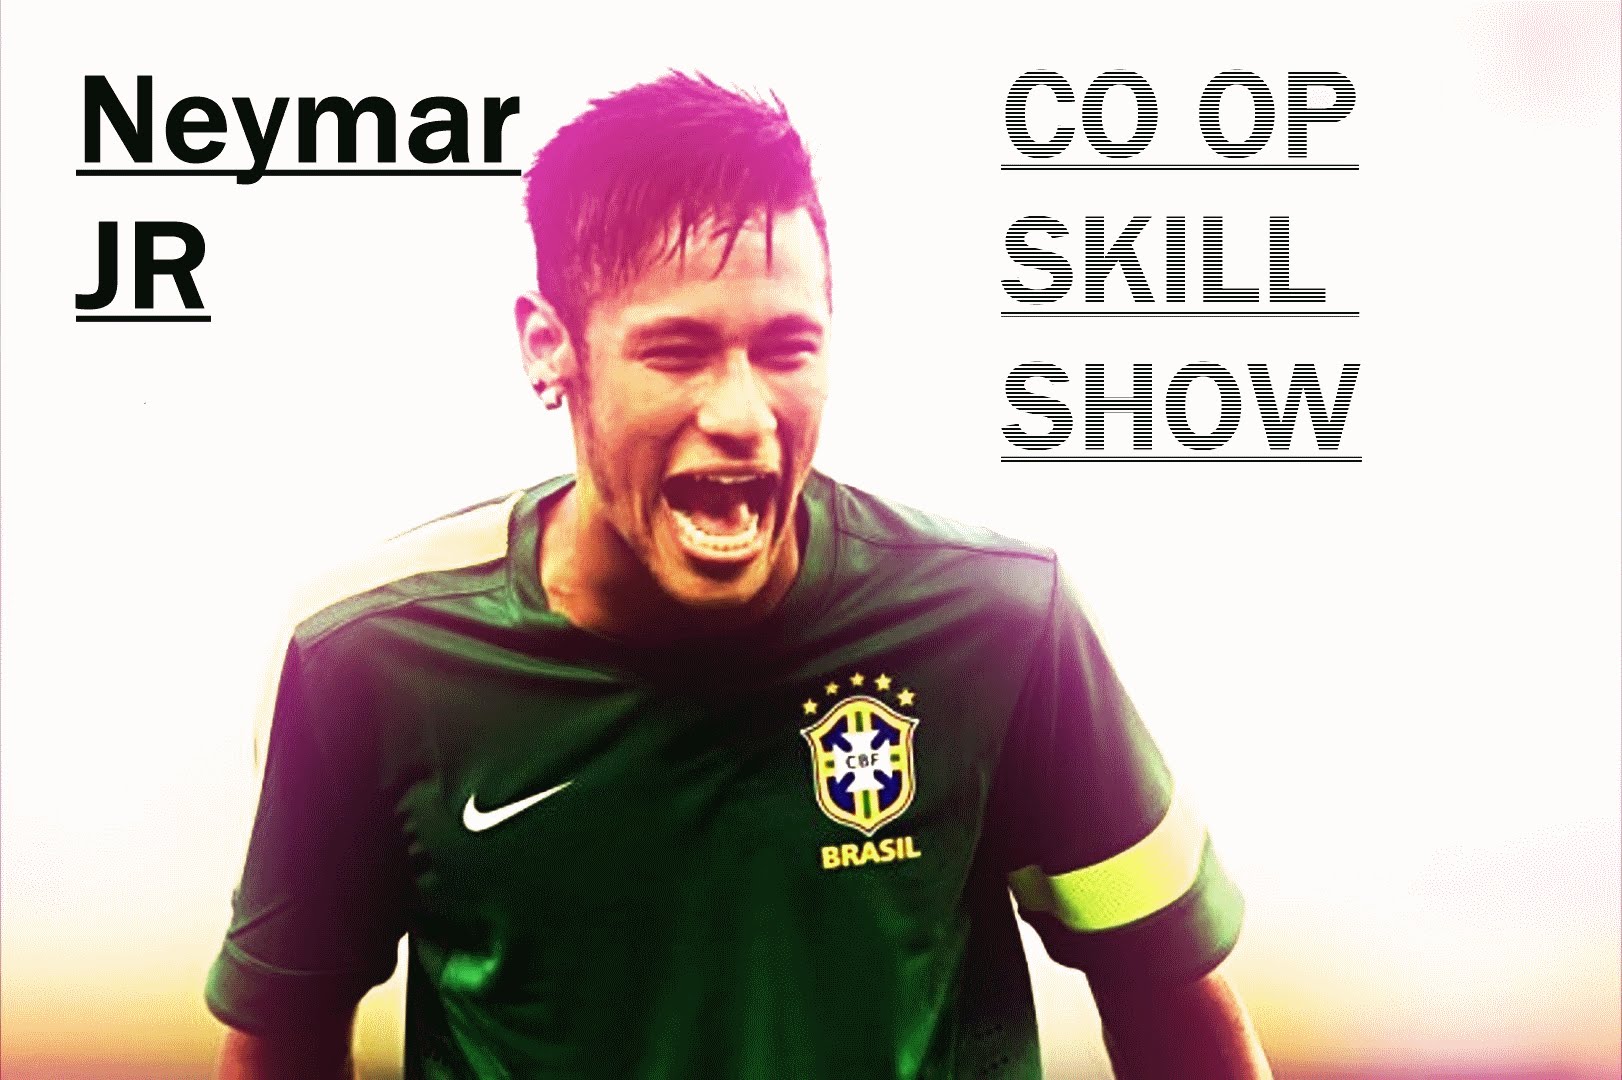 Neymar JR Co-op Amazing goal and skill show - YouTube